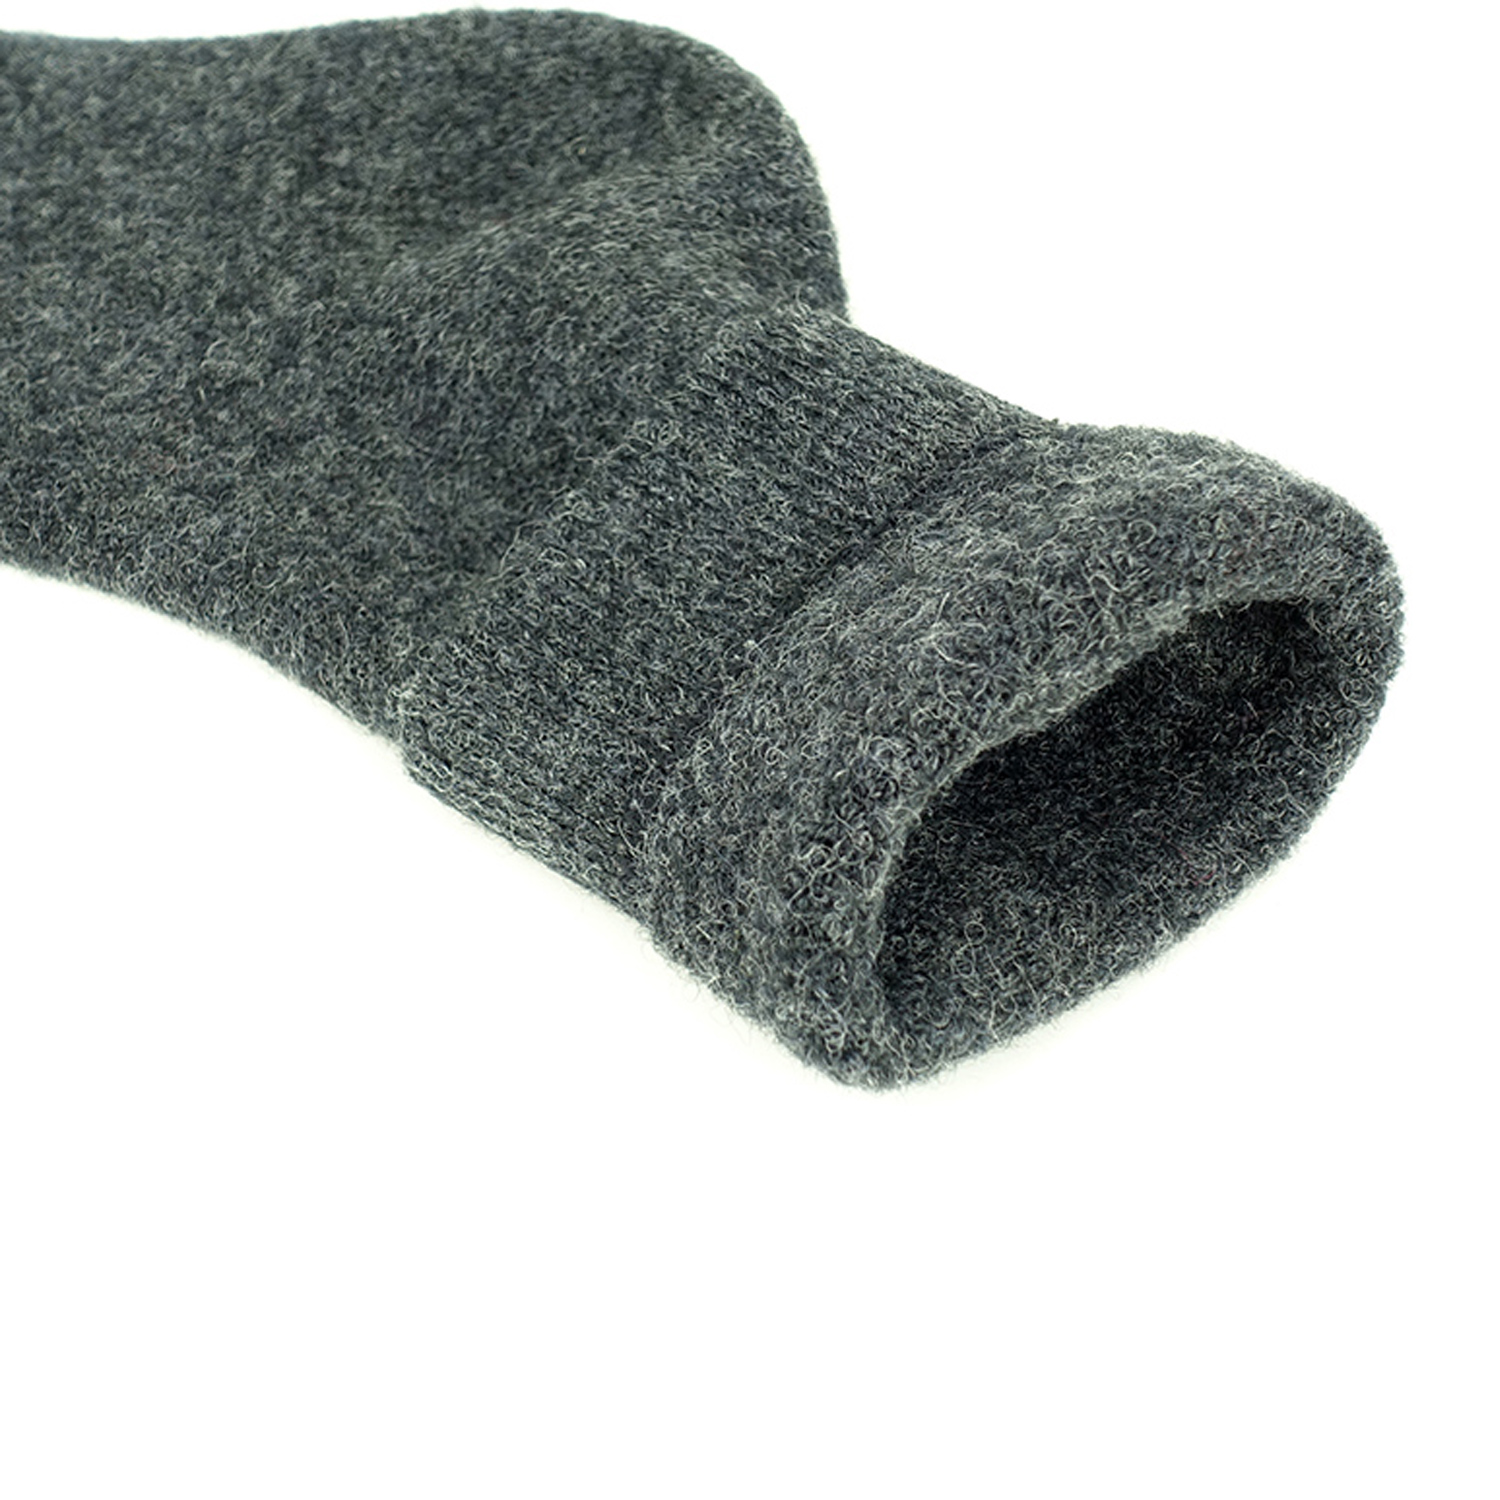 Enluva Termico 2 Overlay Socken